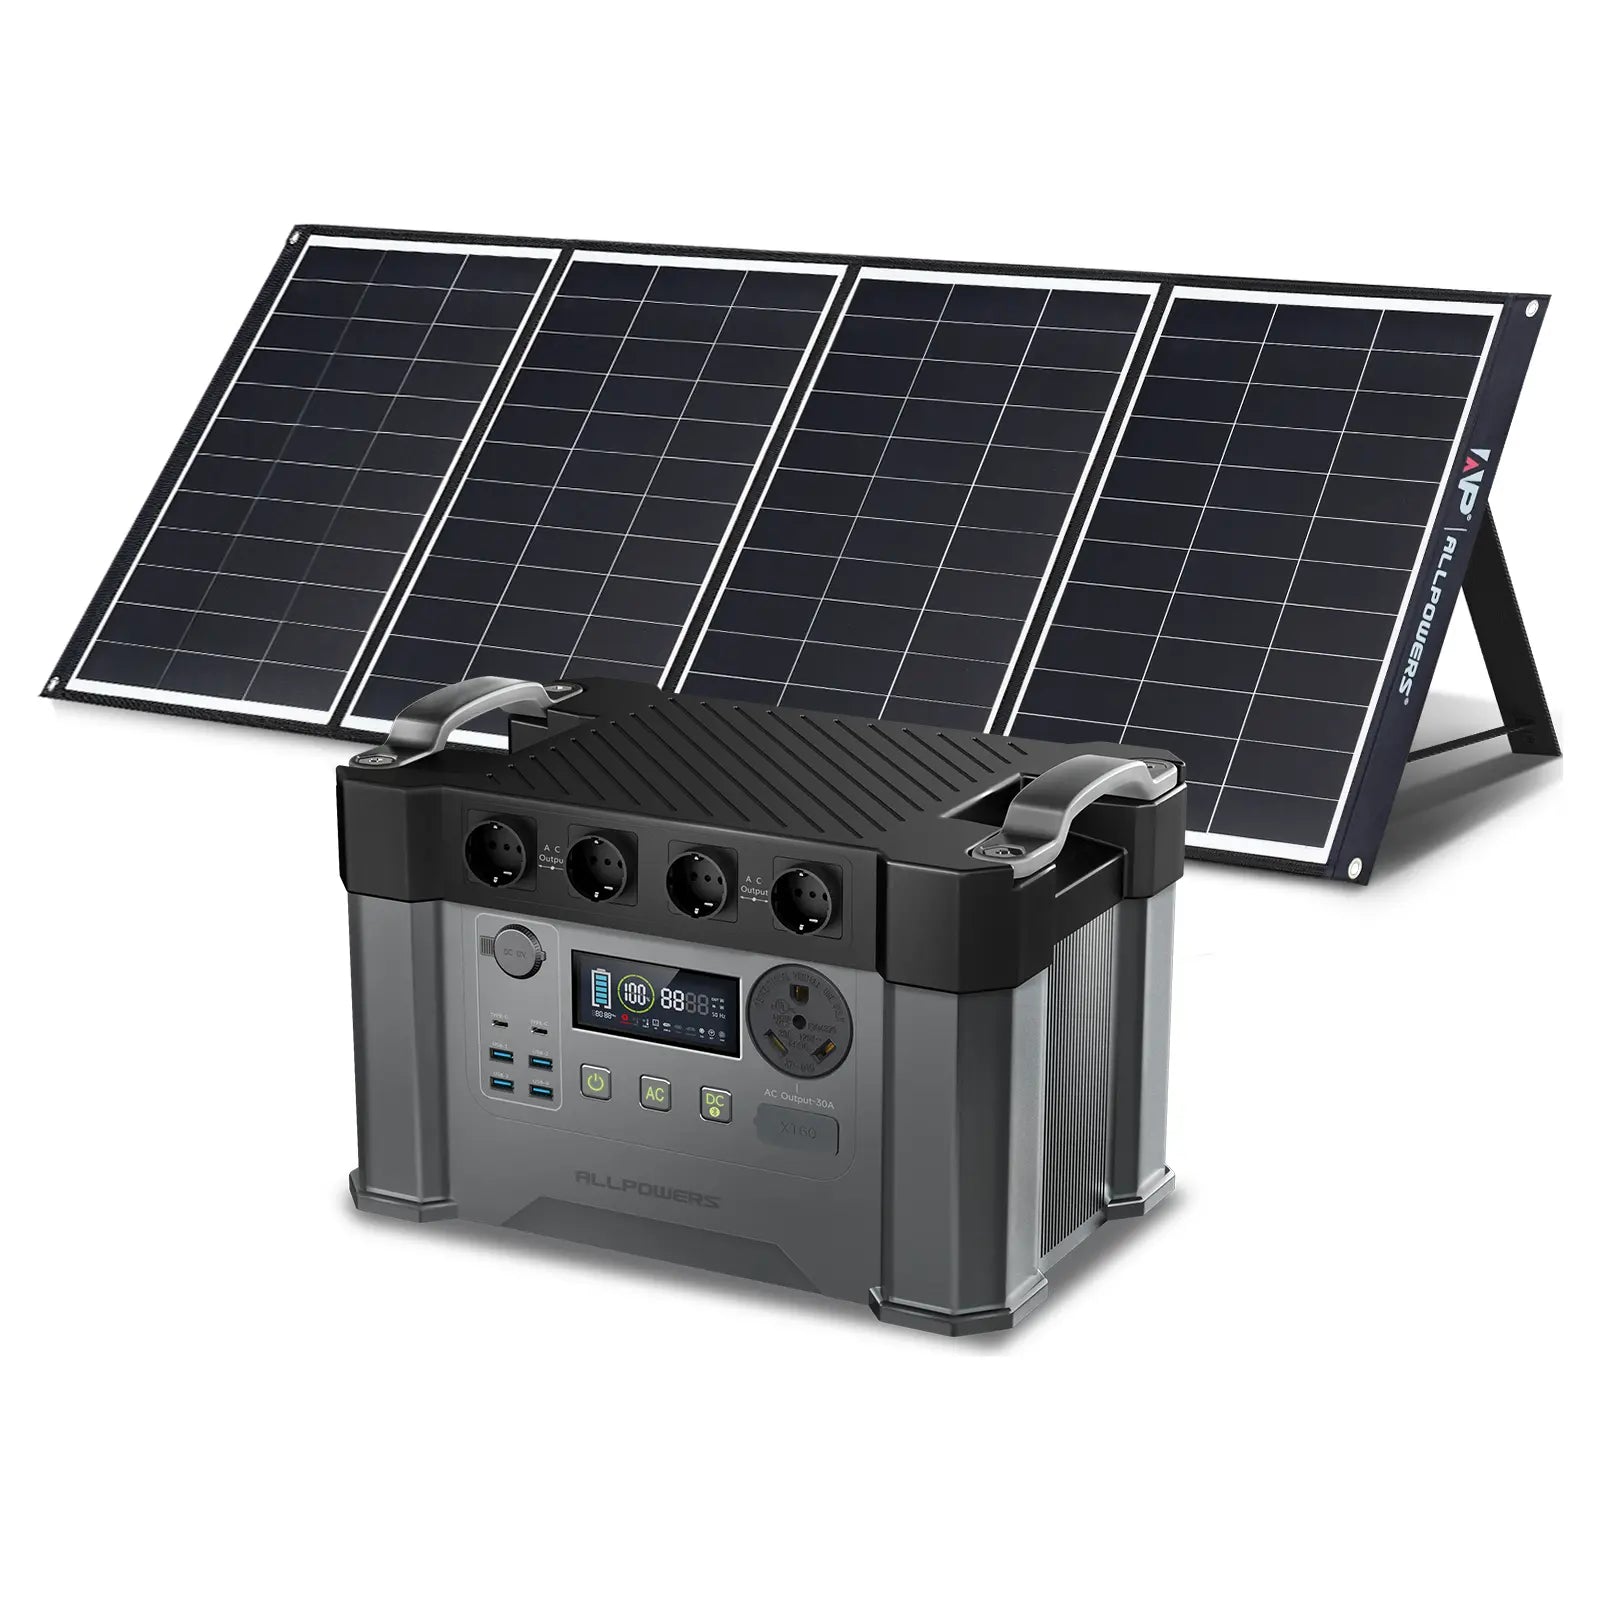 ALLPOWERS Kit Generador Solar 2400W (S2000 Pro + SP035 Panel Solar  200W)